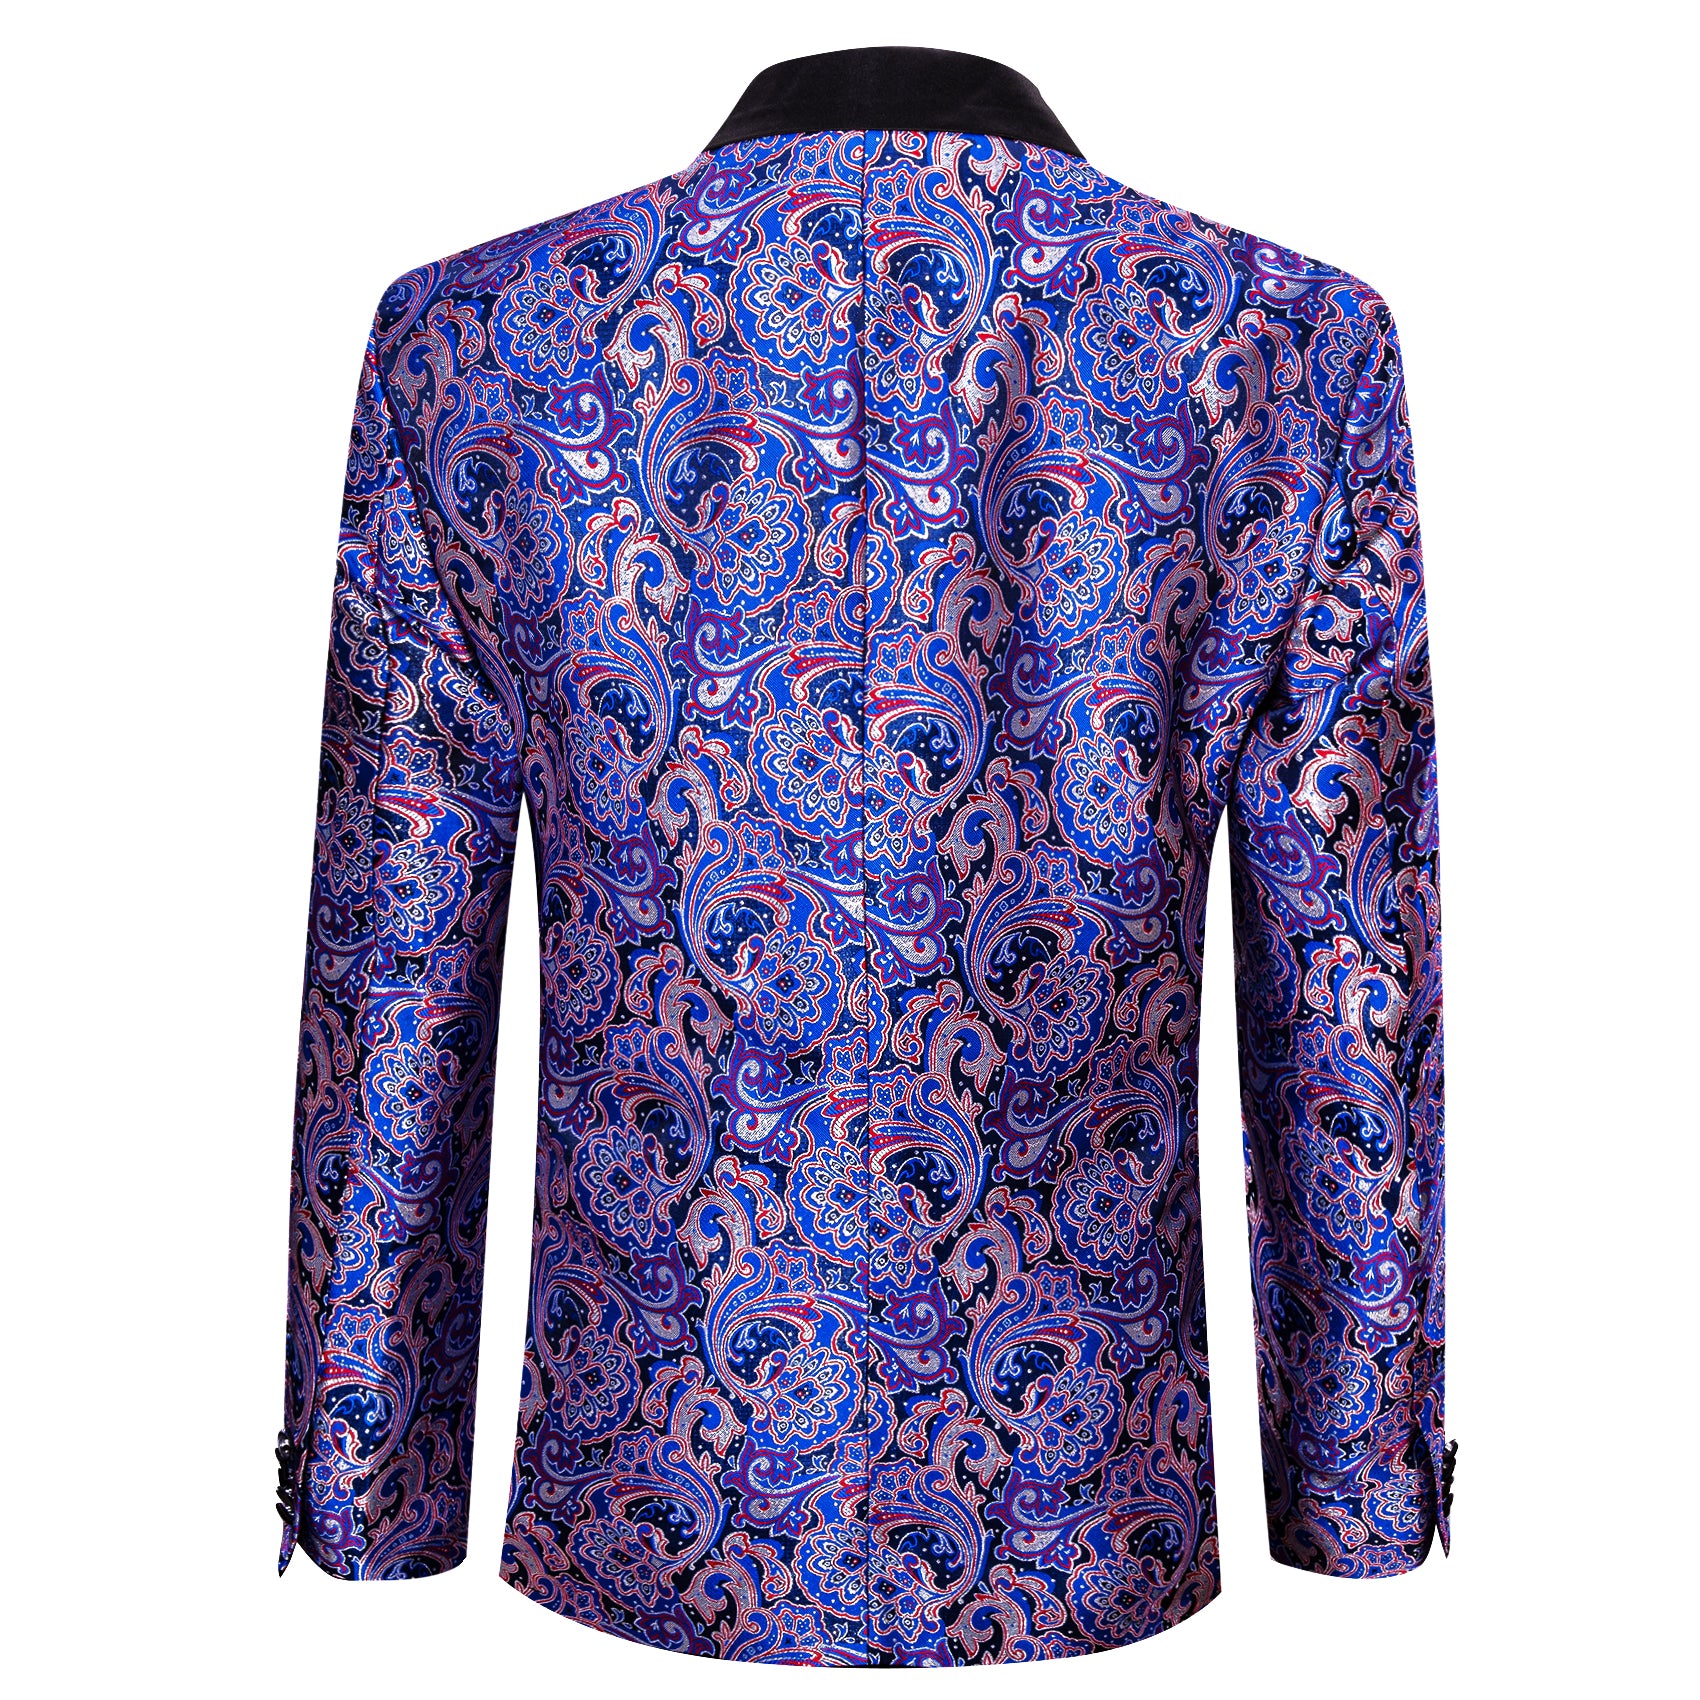 Men's Dress Party Hyacinth Floral Suit Jacket Slim One Button Stylish